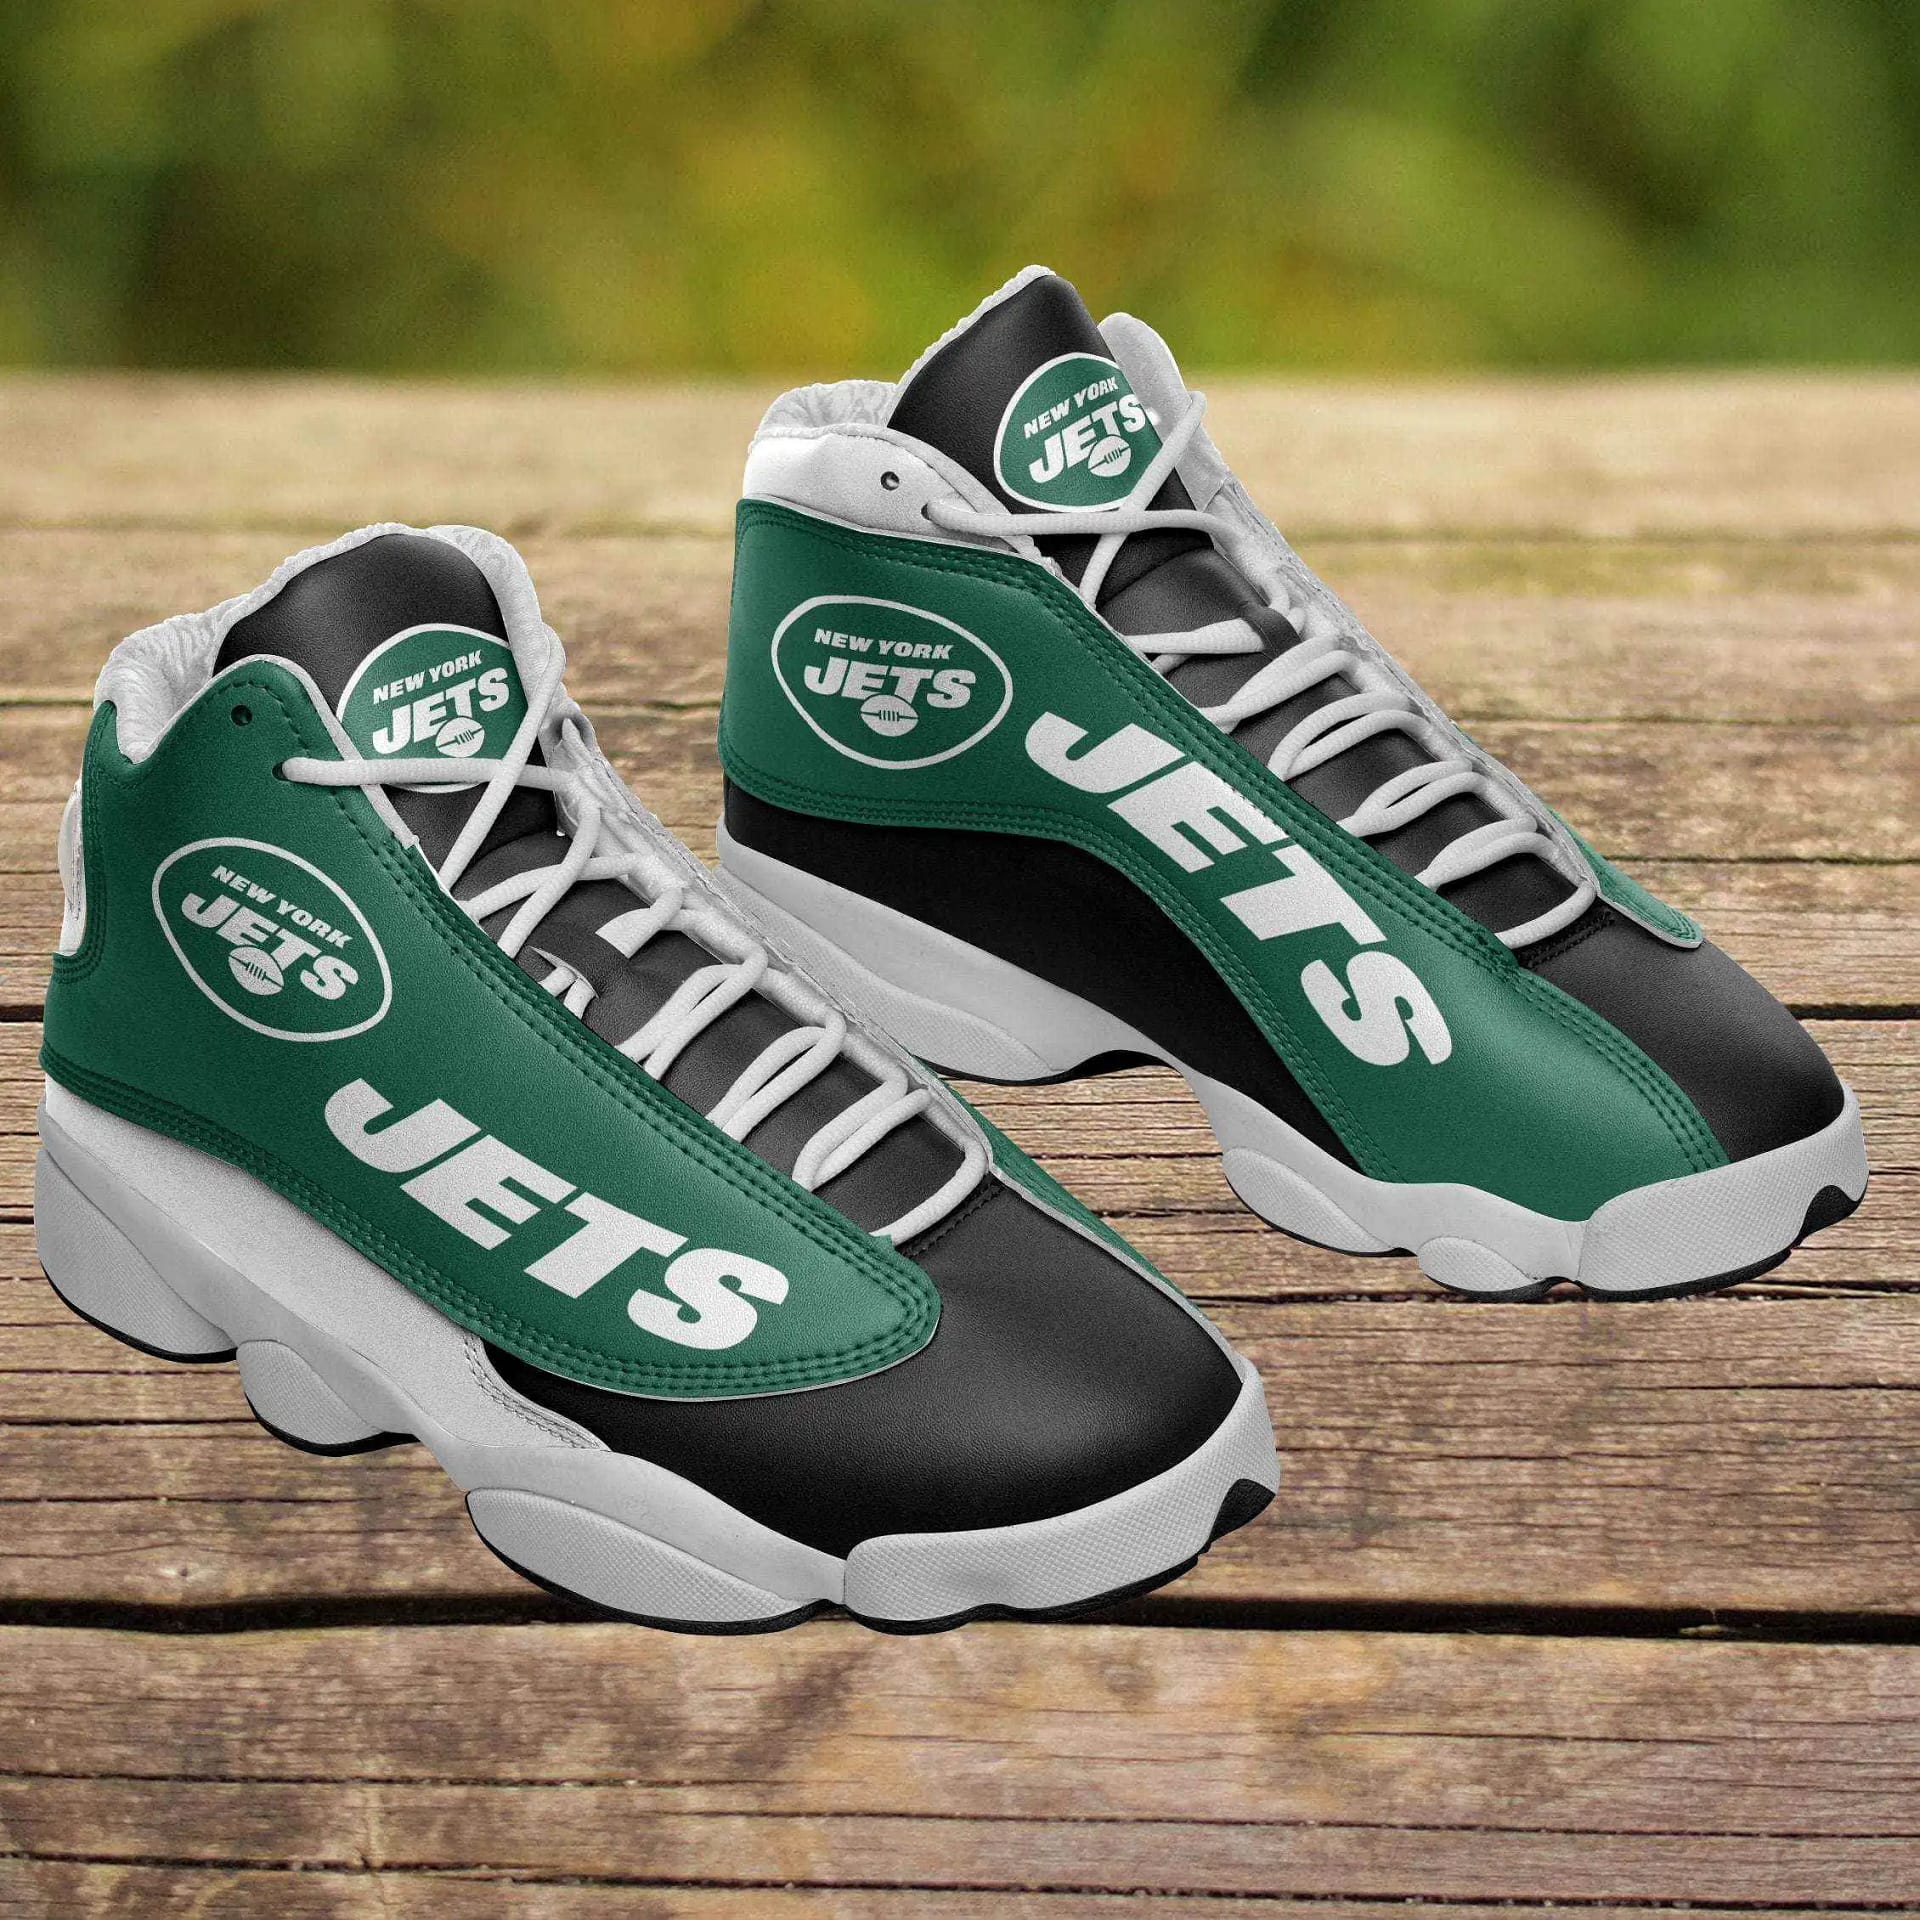 New York Jets Air Jordan Shoes